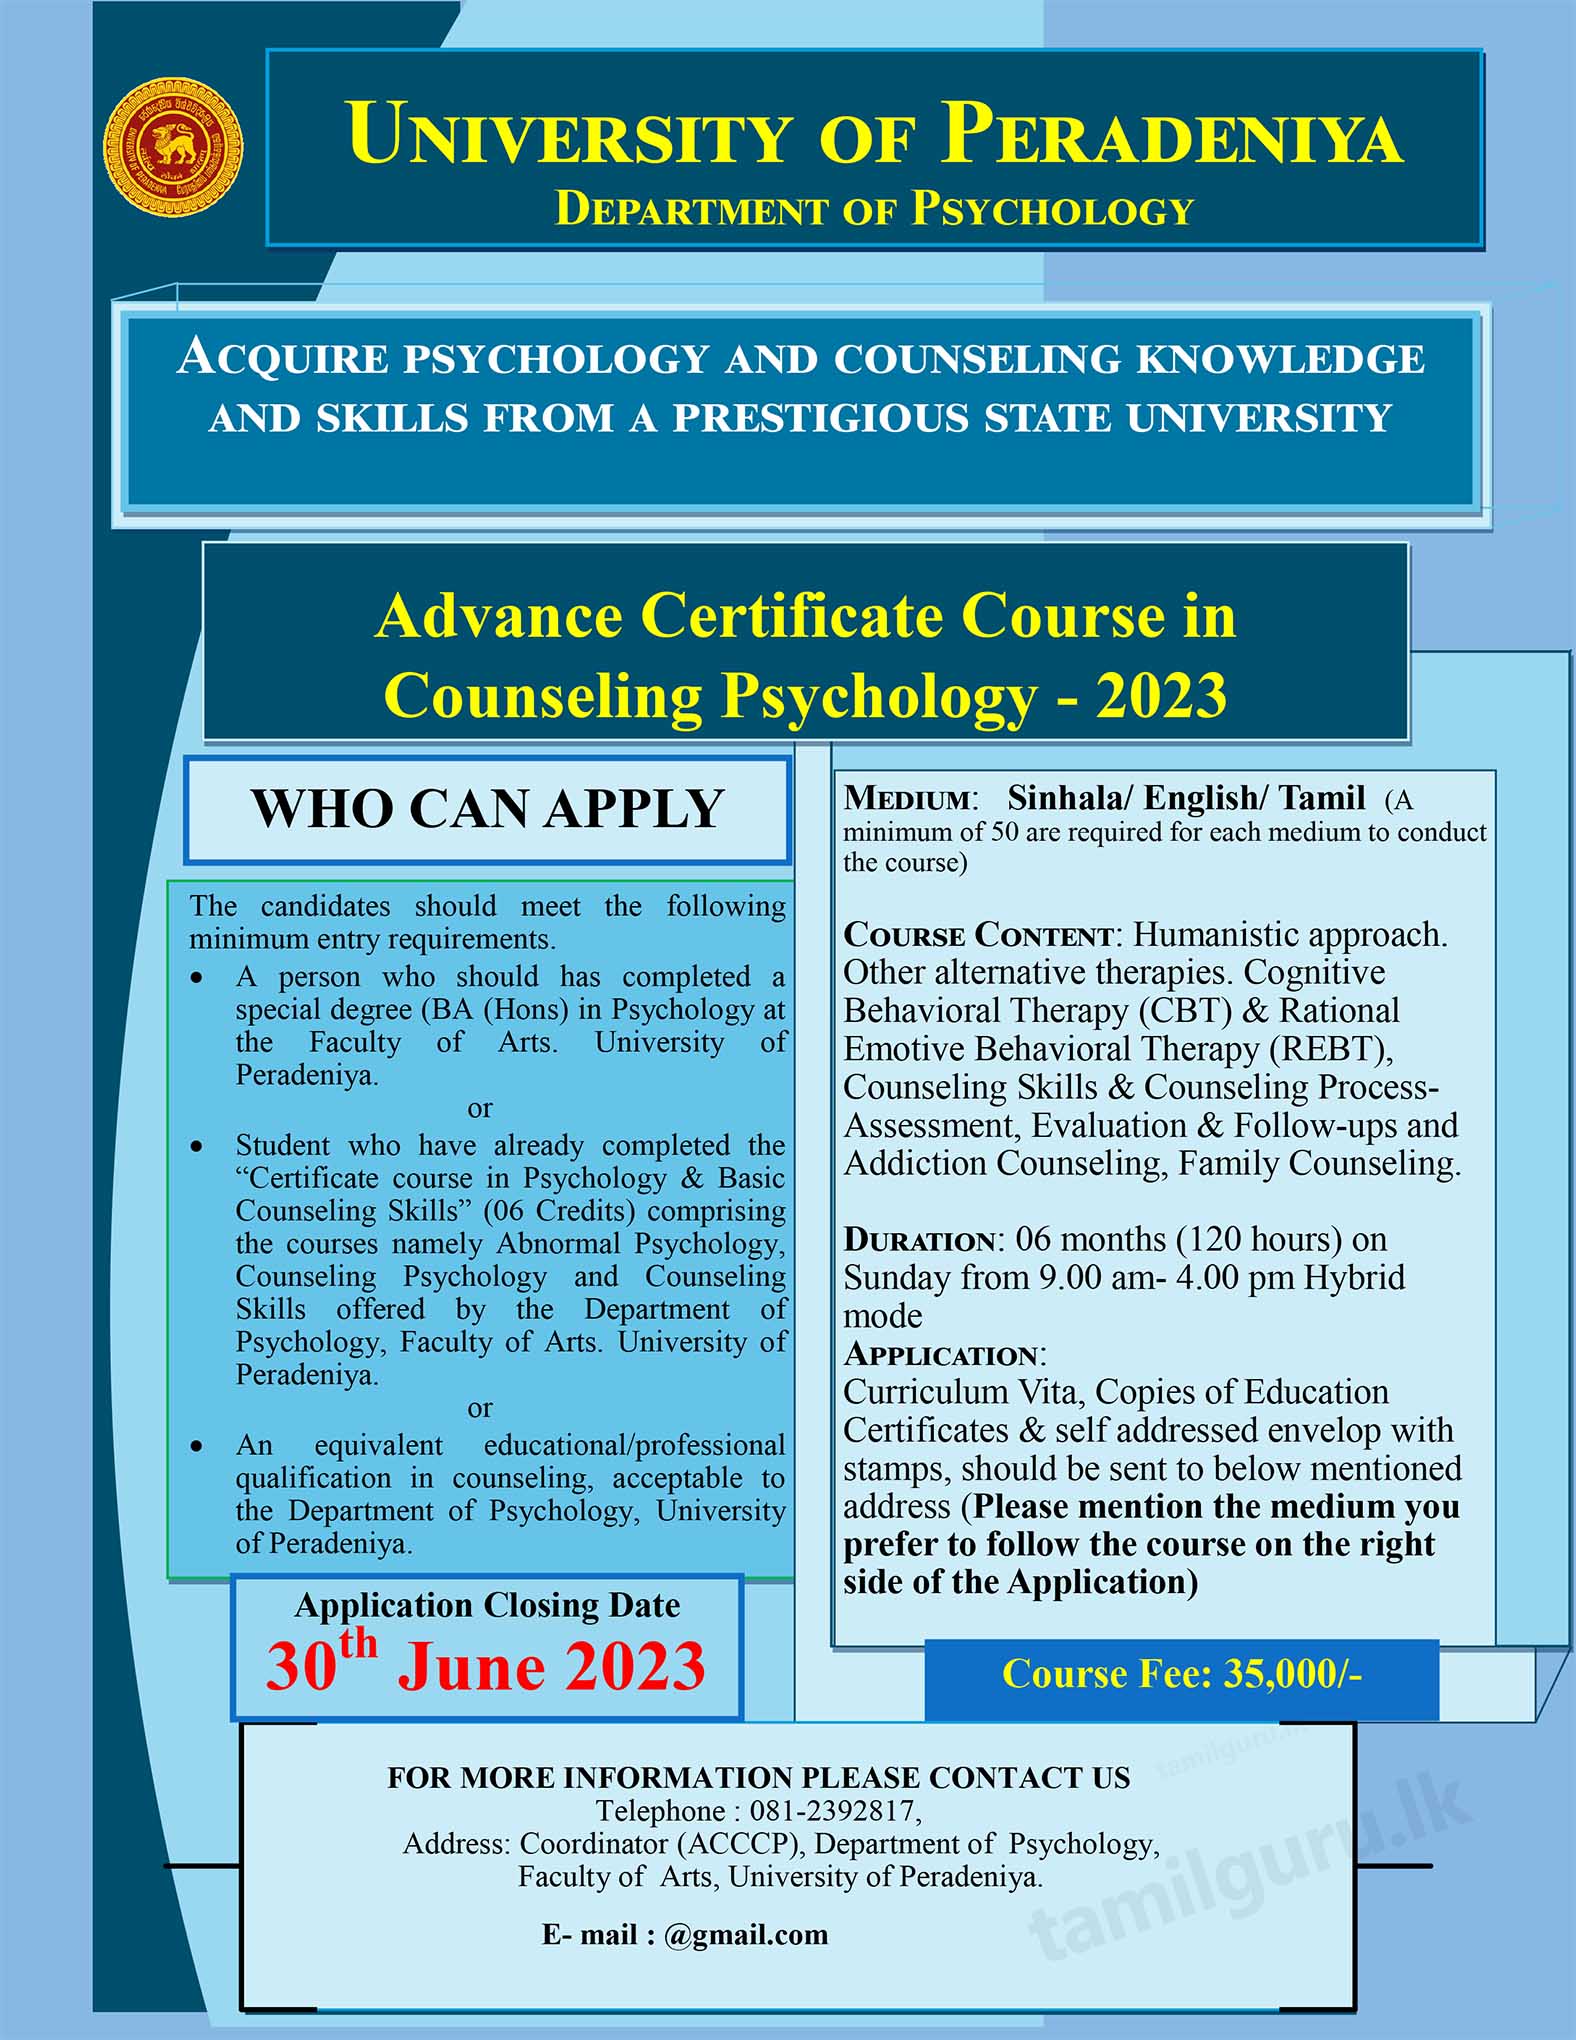 Advanced Certificate Course in Counseling Psychology 2023 - University of Peradeniya